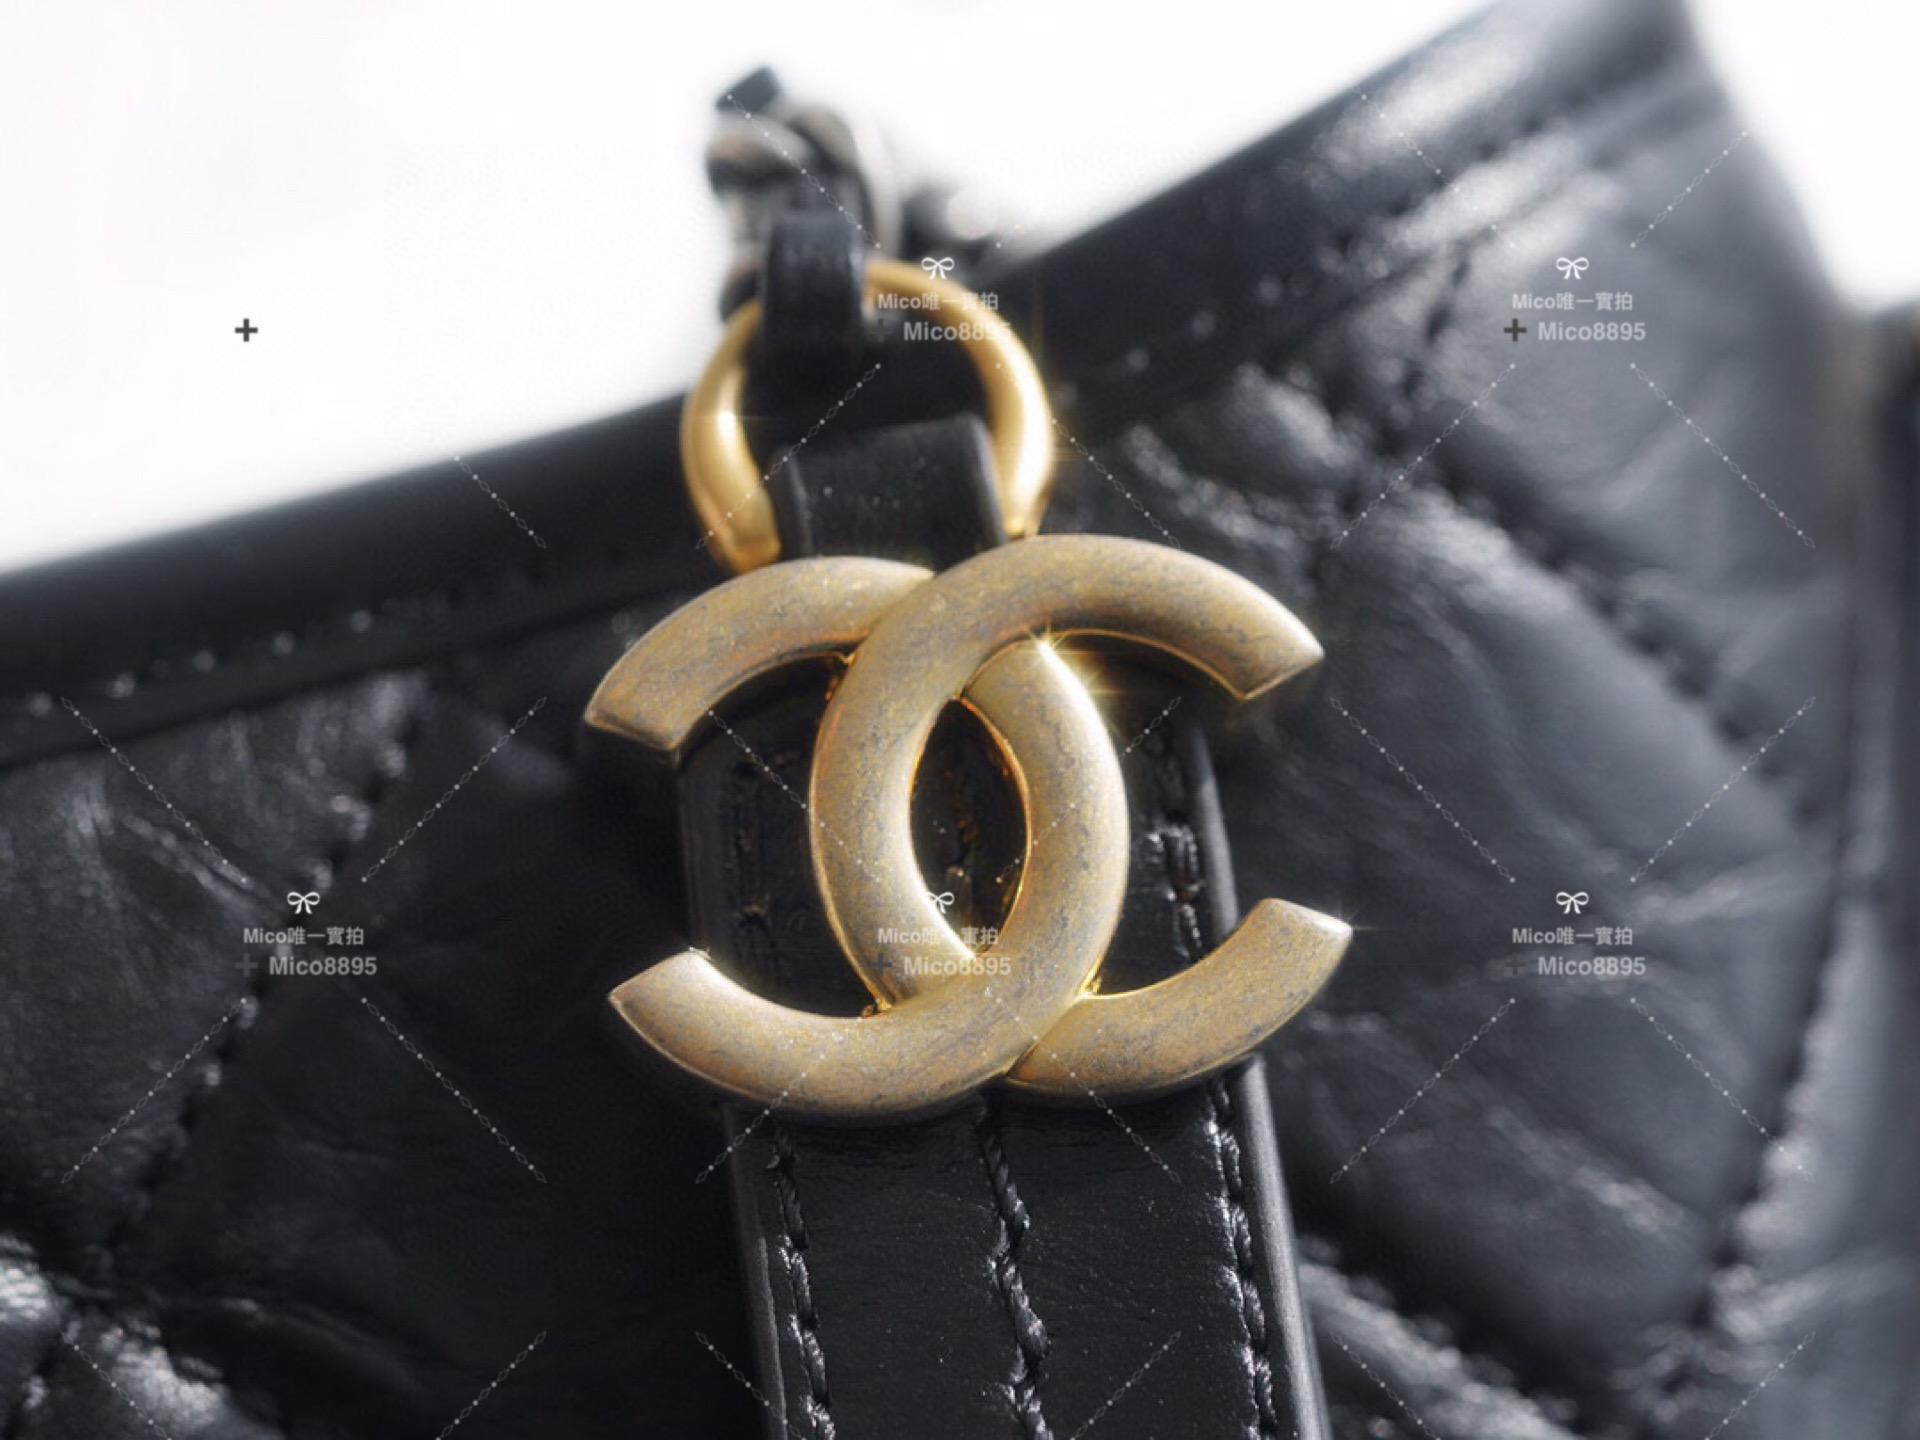 Chanel 𝗚𝗮𝗯𝗿𝗶𝗲𝗹𝗹𝗲 經典菱格流浪包 🖤黑色小號 20cm